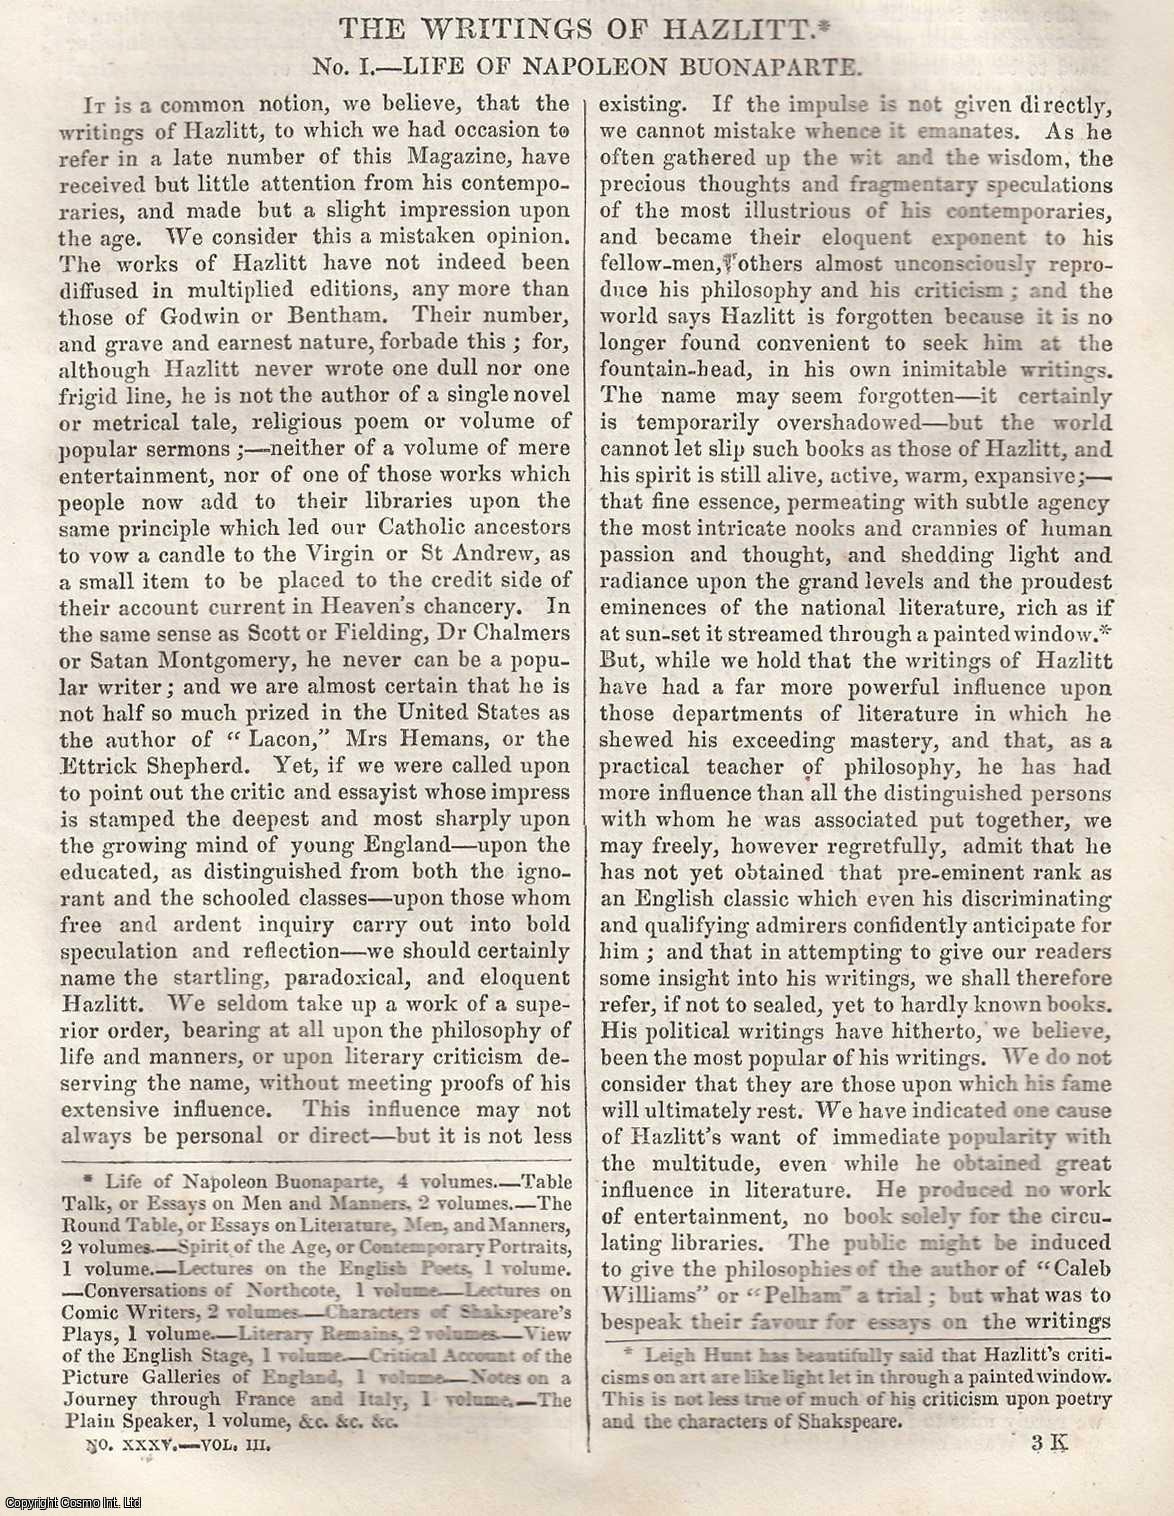 Johnstone, Christian - The Writings of Hazlitt (No. 1): Life of Napoleon Buonaparte. An original article from Tait's Edinburgh Magazine, 1836.